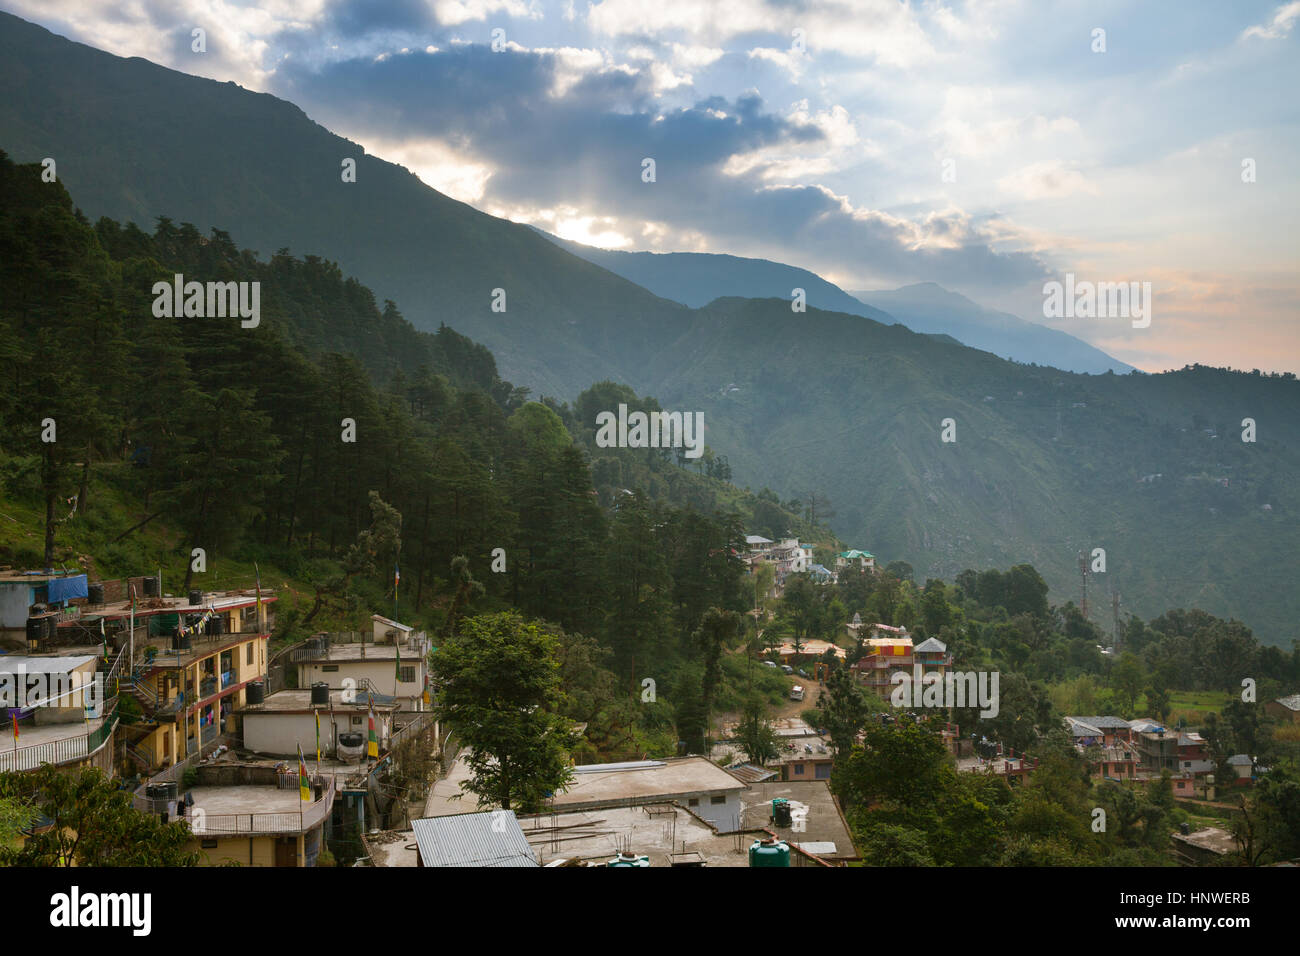 Sunrise over McLeodGanj, the residence town of Dalai Lama, Dharamsala, India. Stock Photo